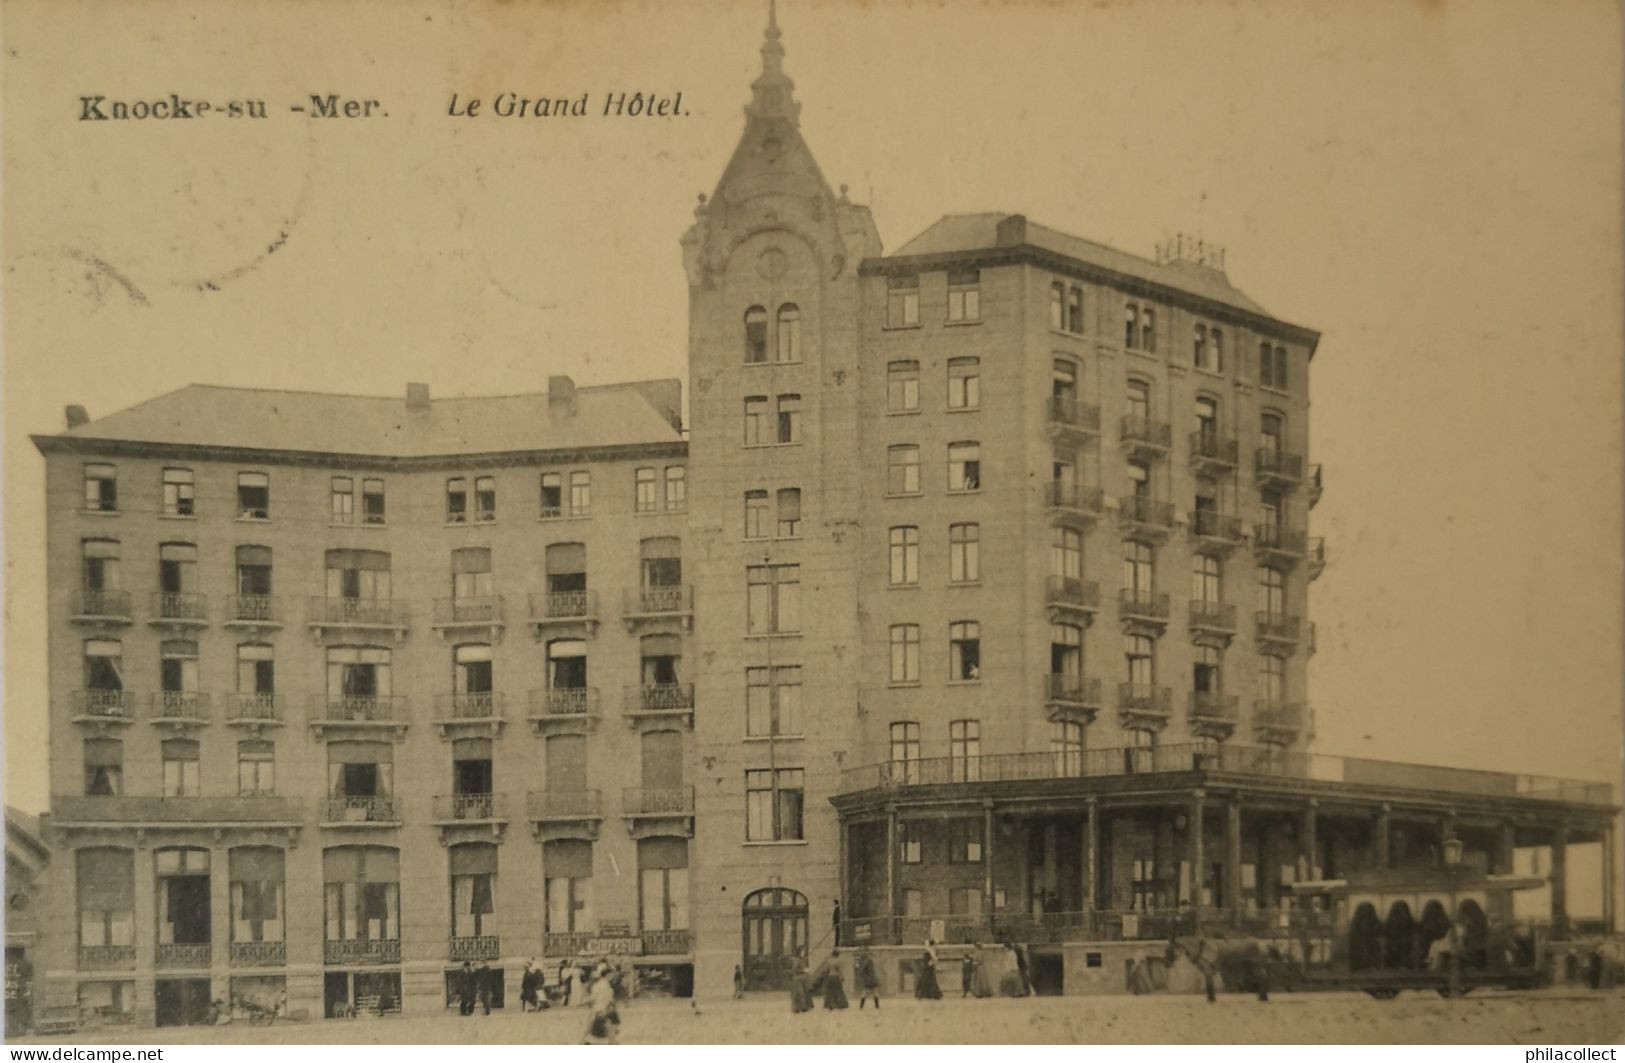 Knocke S/Mer (Knokke) Le Grand Hotel 1921 - Knokke